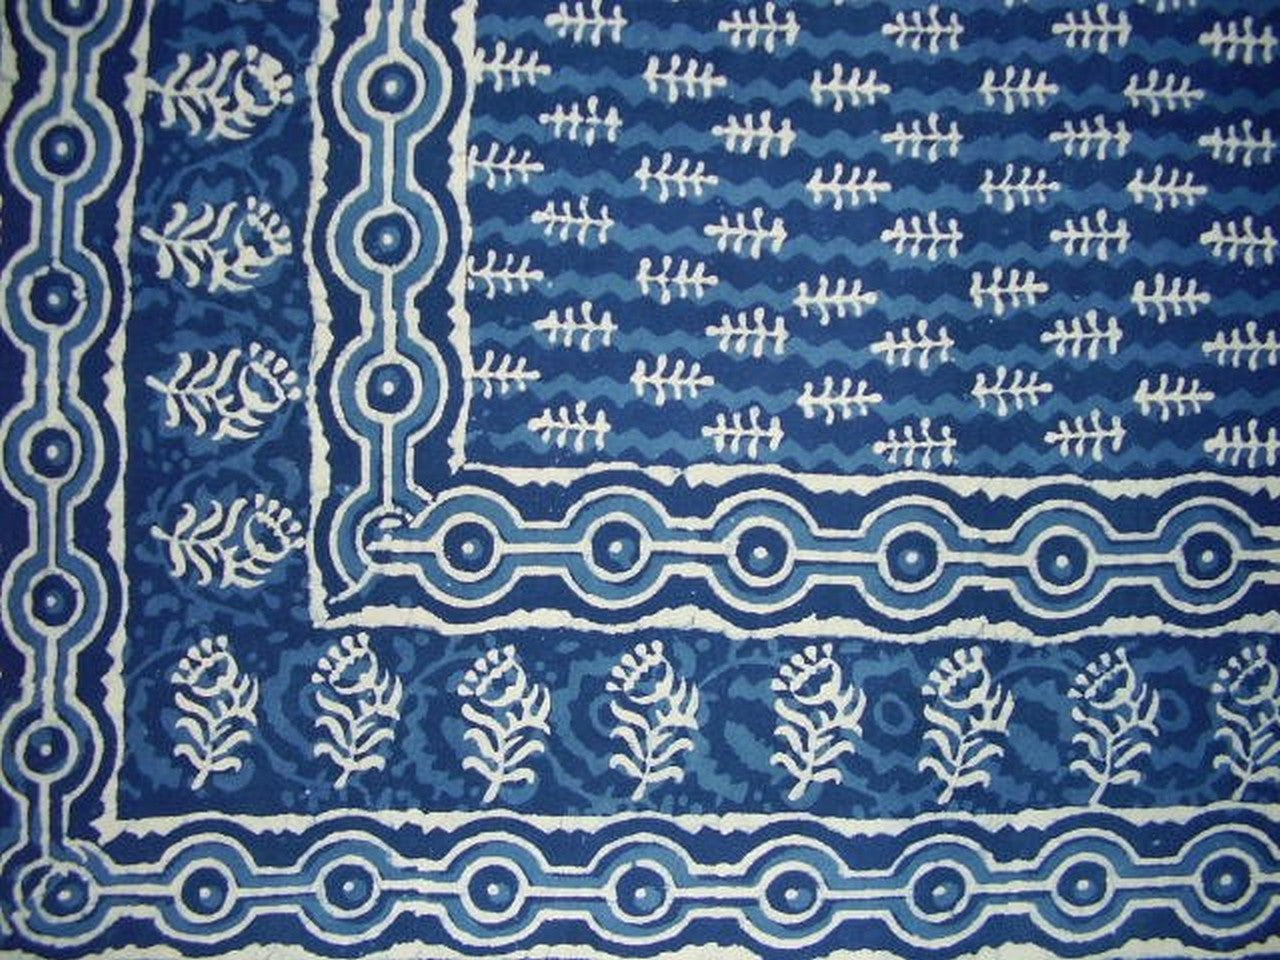 Dabu katoenen sprei met Indiase tapijten, 300 x 200 cm, volledig koninginblauw